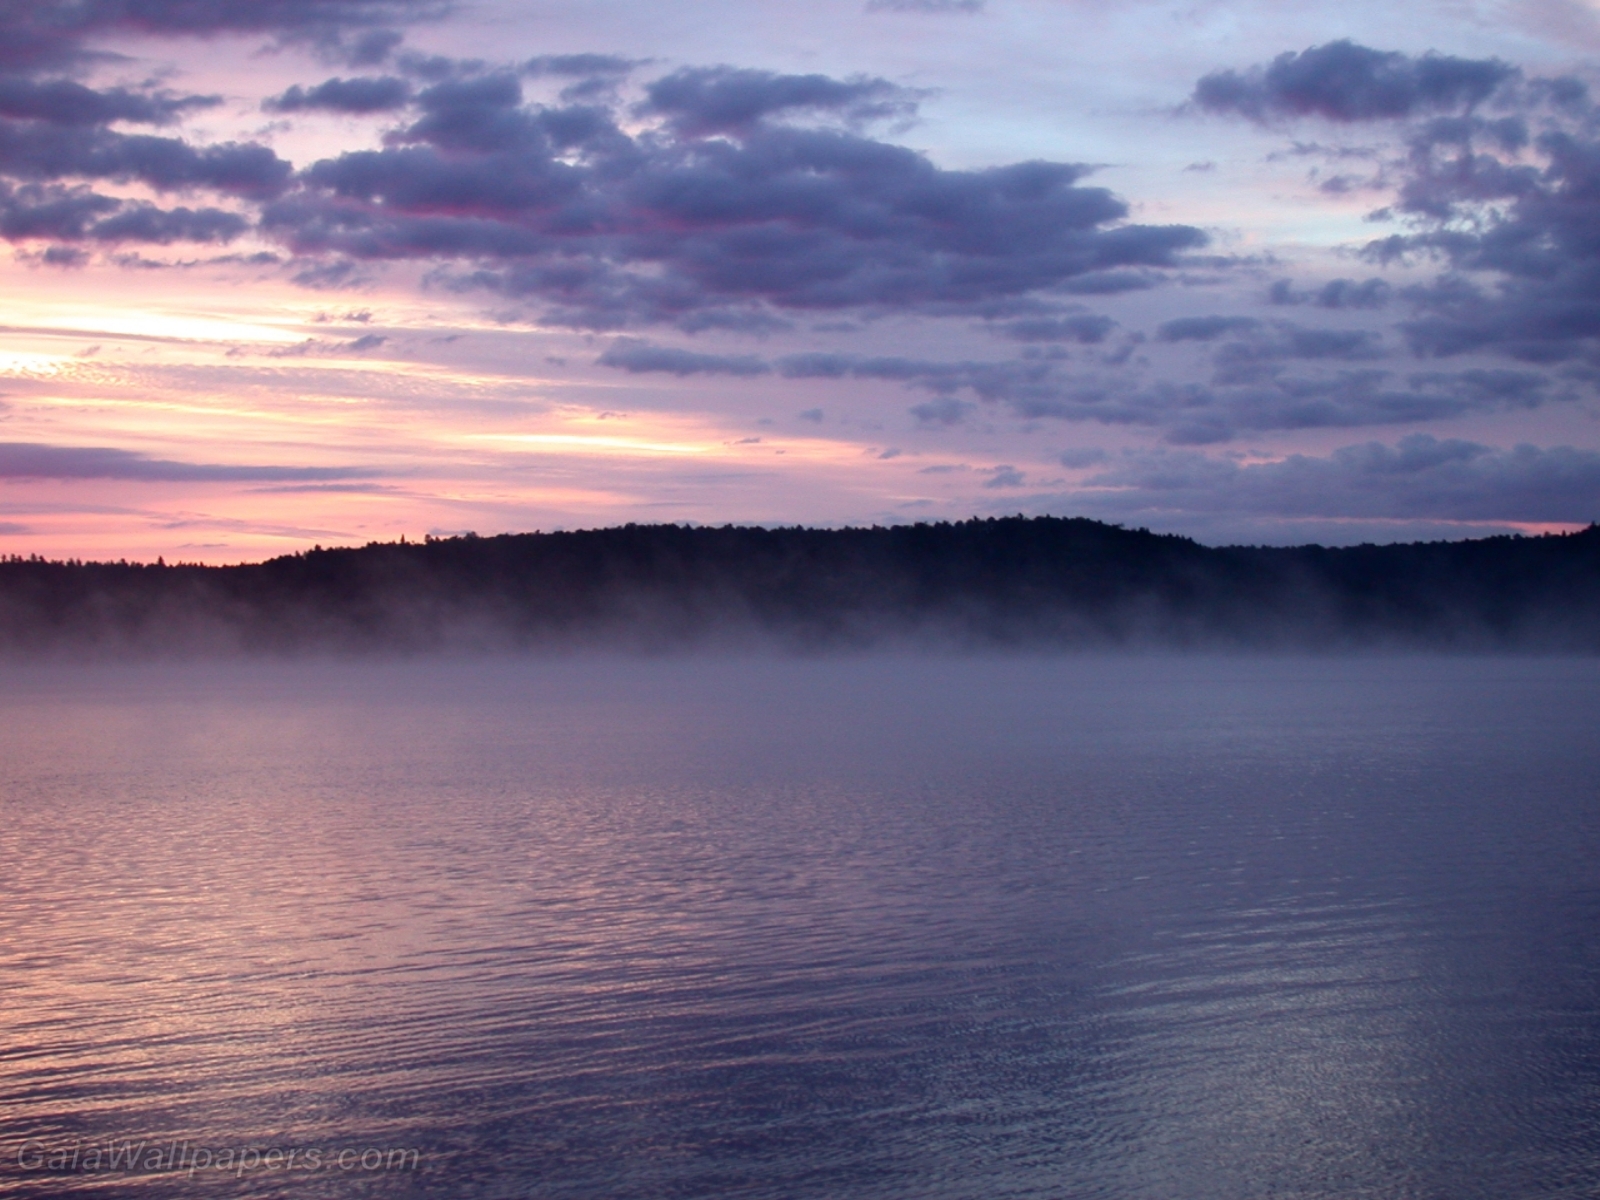 Lake Gagnon in the morning fog - Free desktop wallpapers